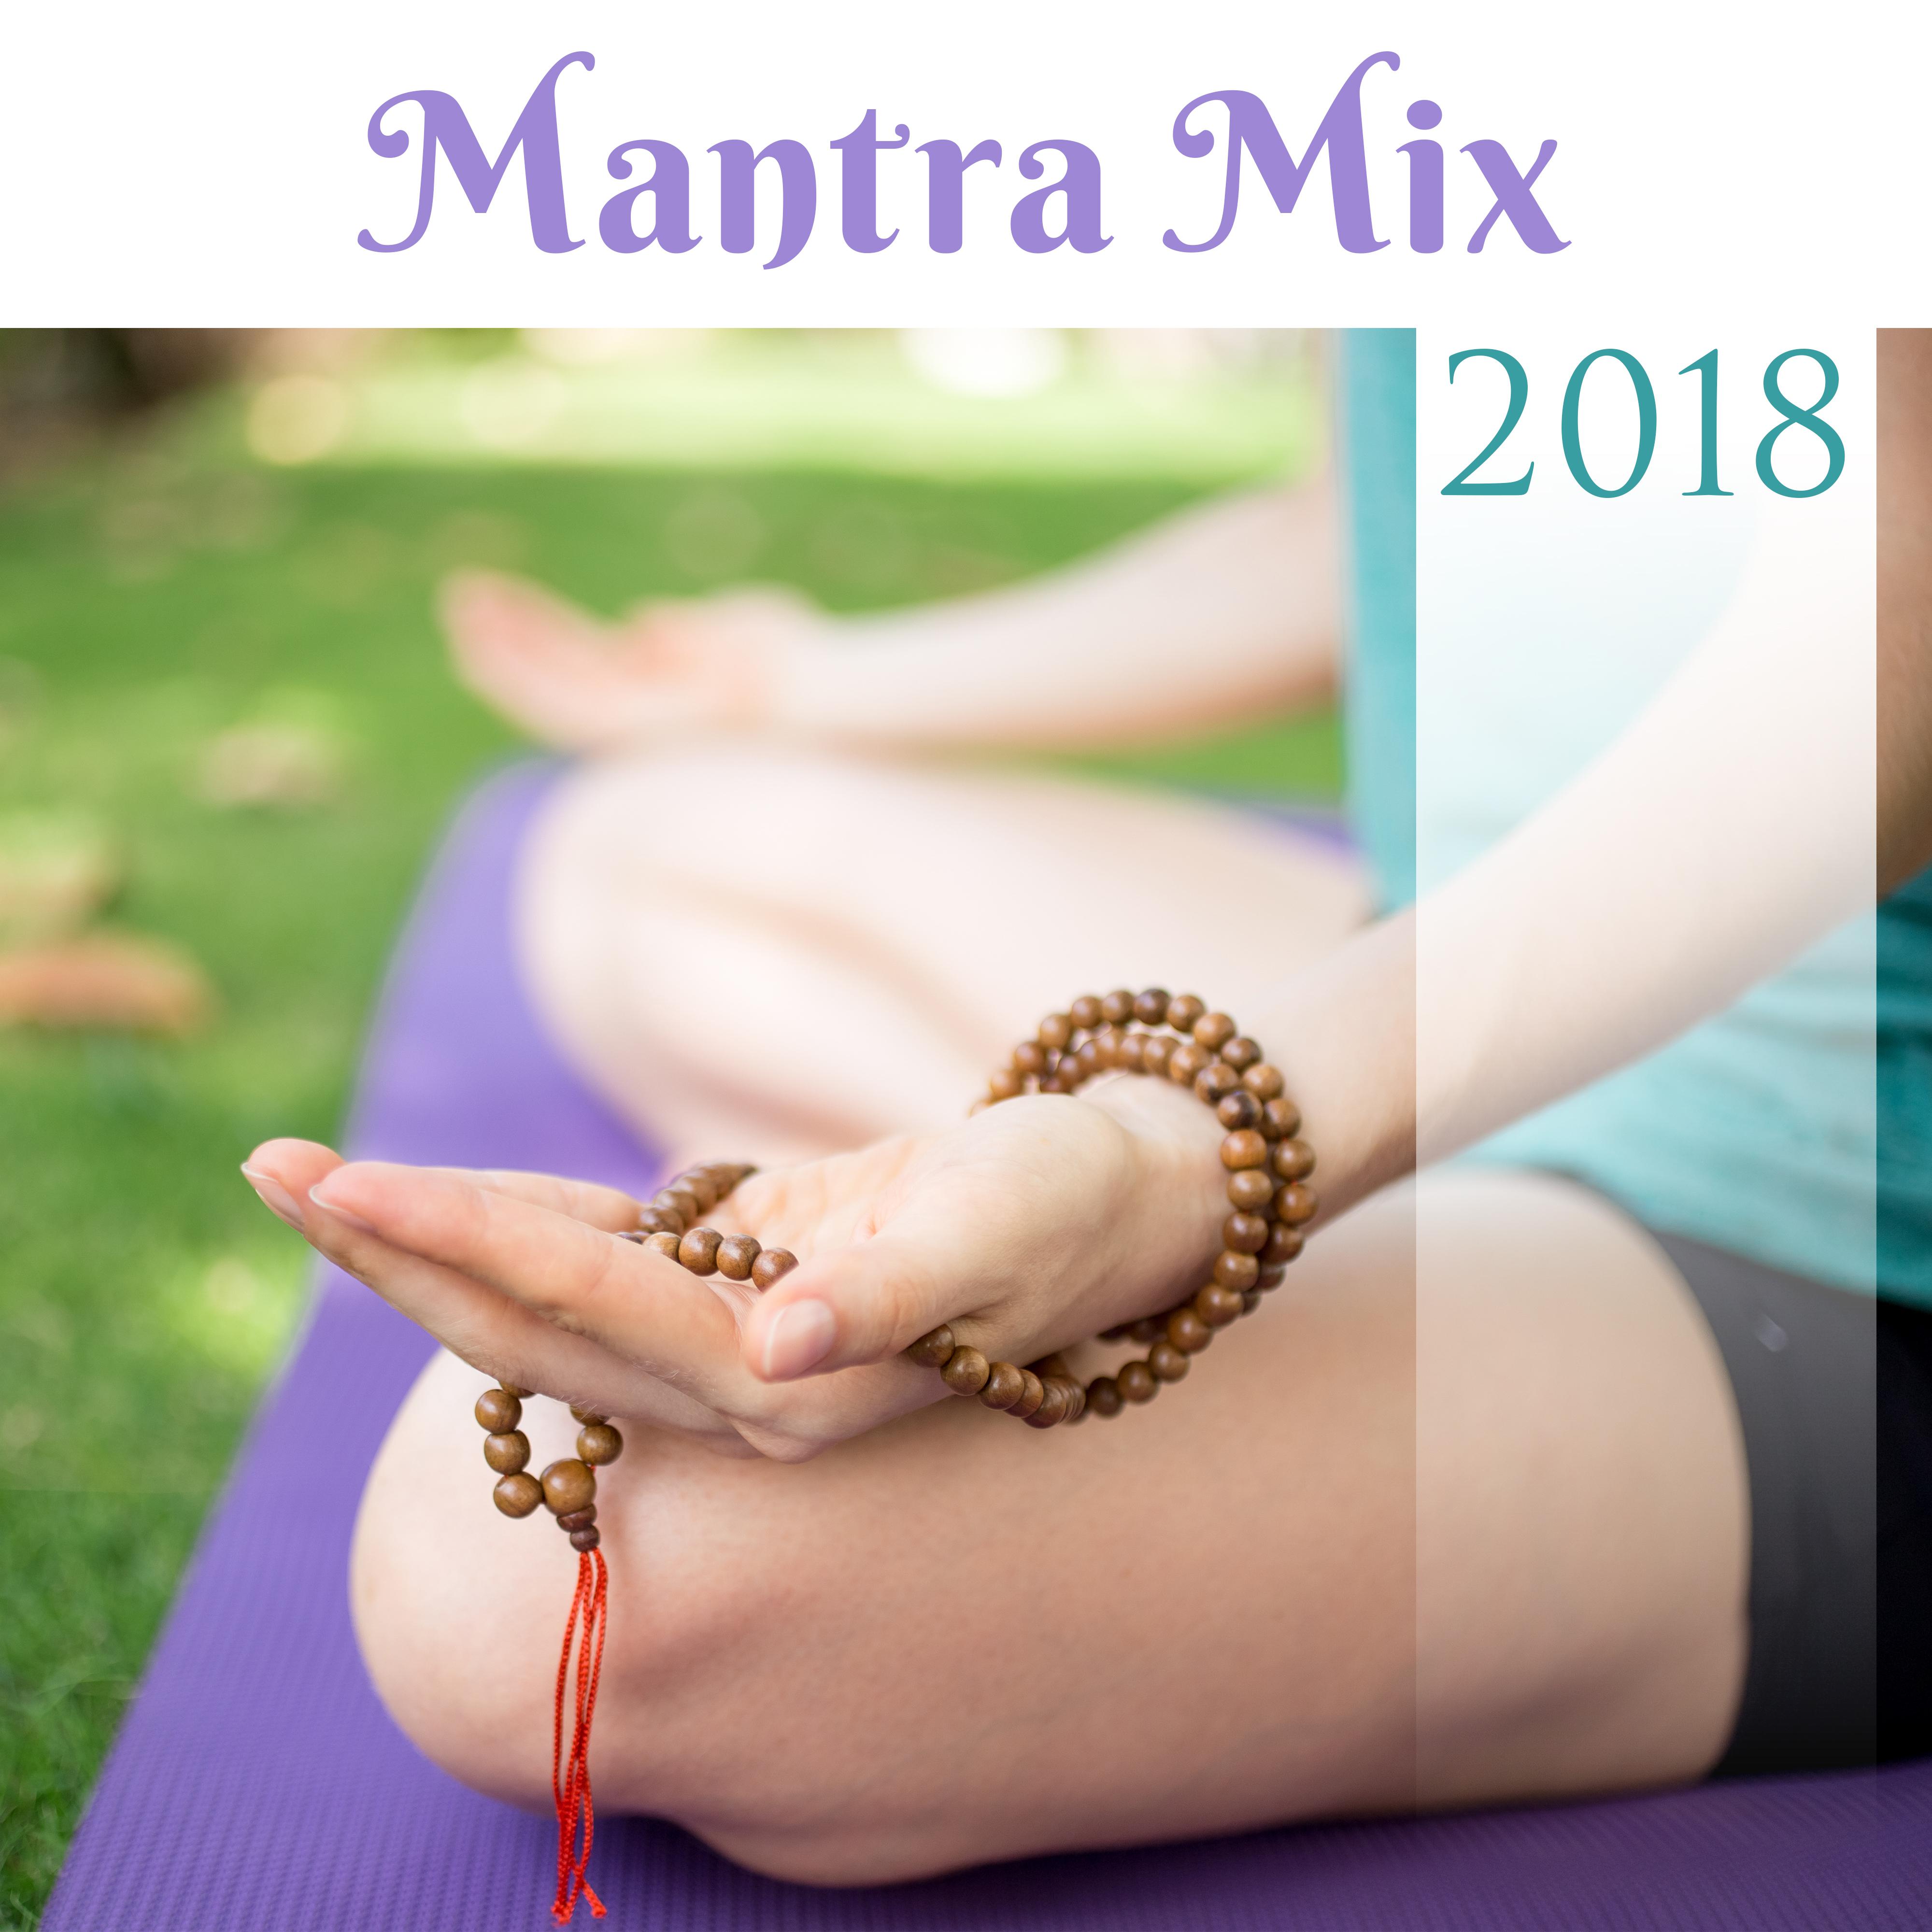 Mantra Mix 2018